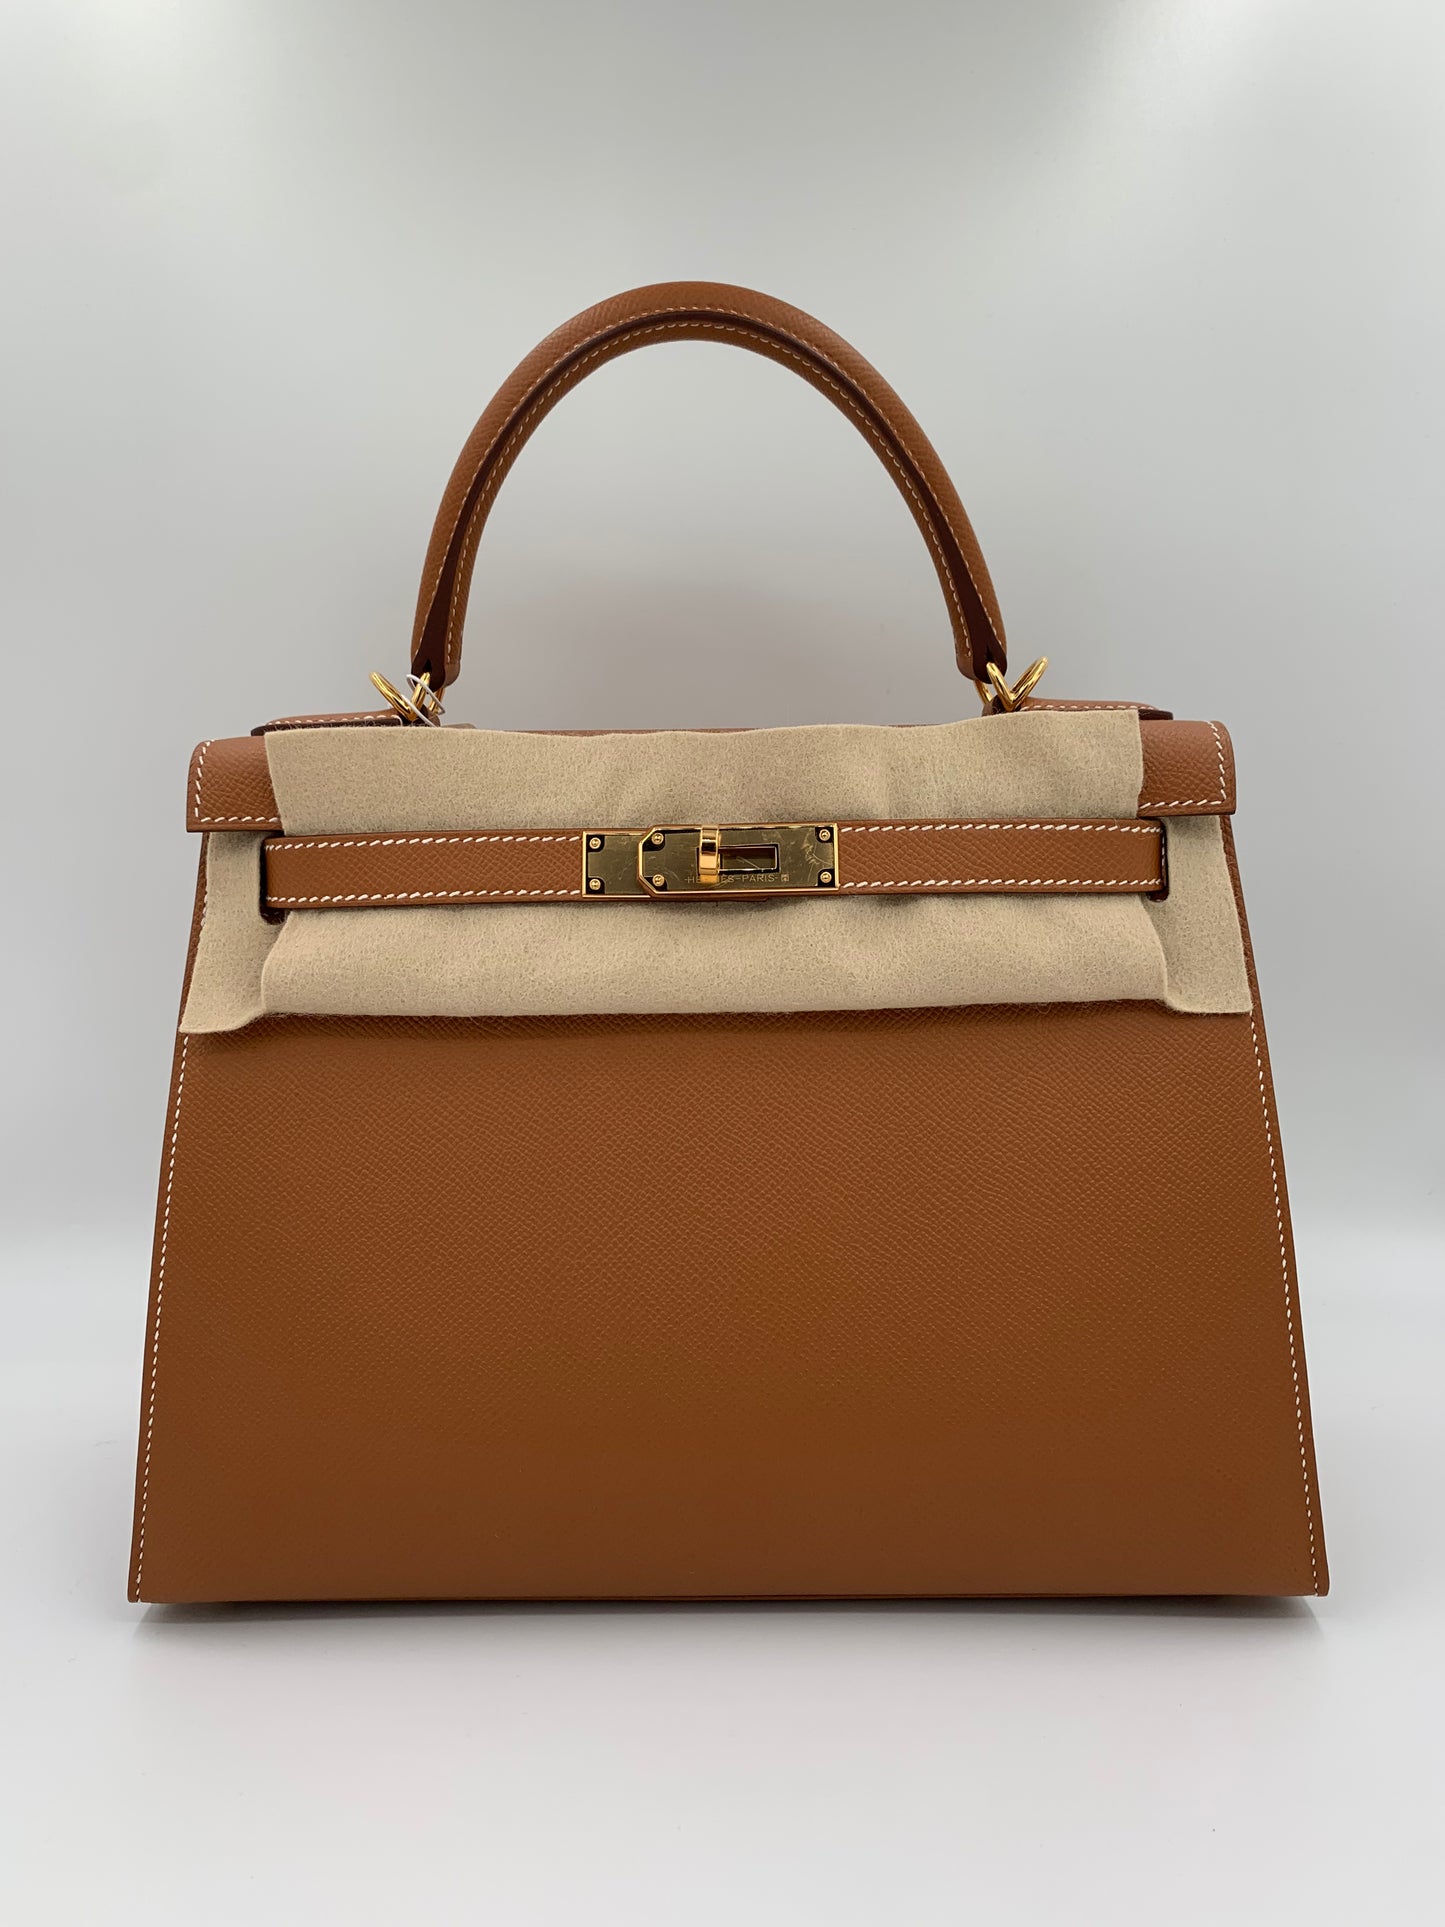 Hermès Kelly 28 handbag STAMP Z